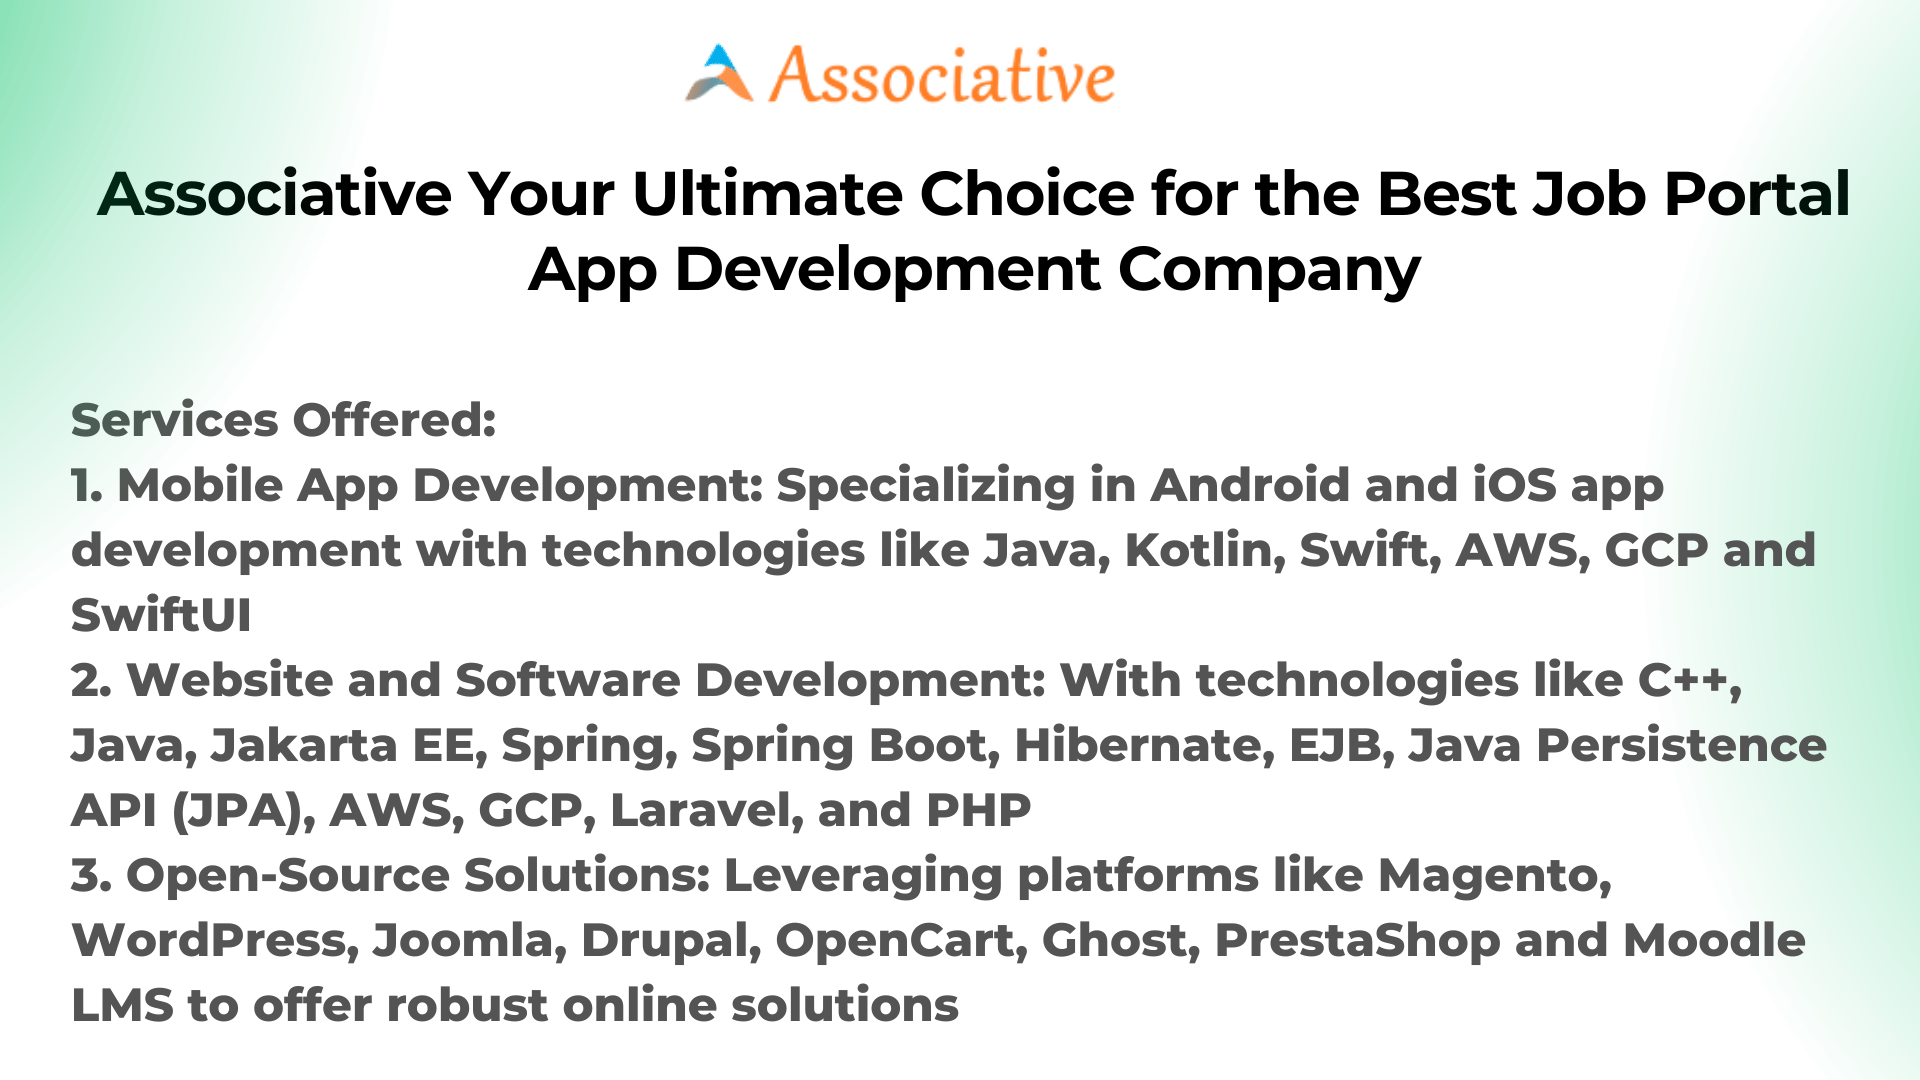 Associative Your Ultimate Choice for the Best Job Portal App Development Company